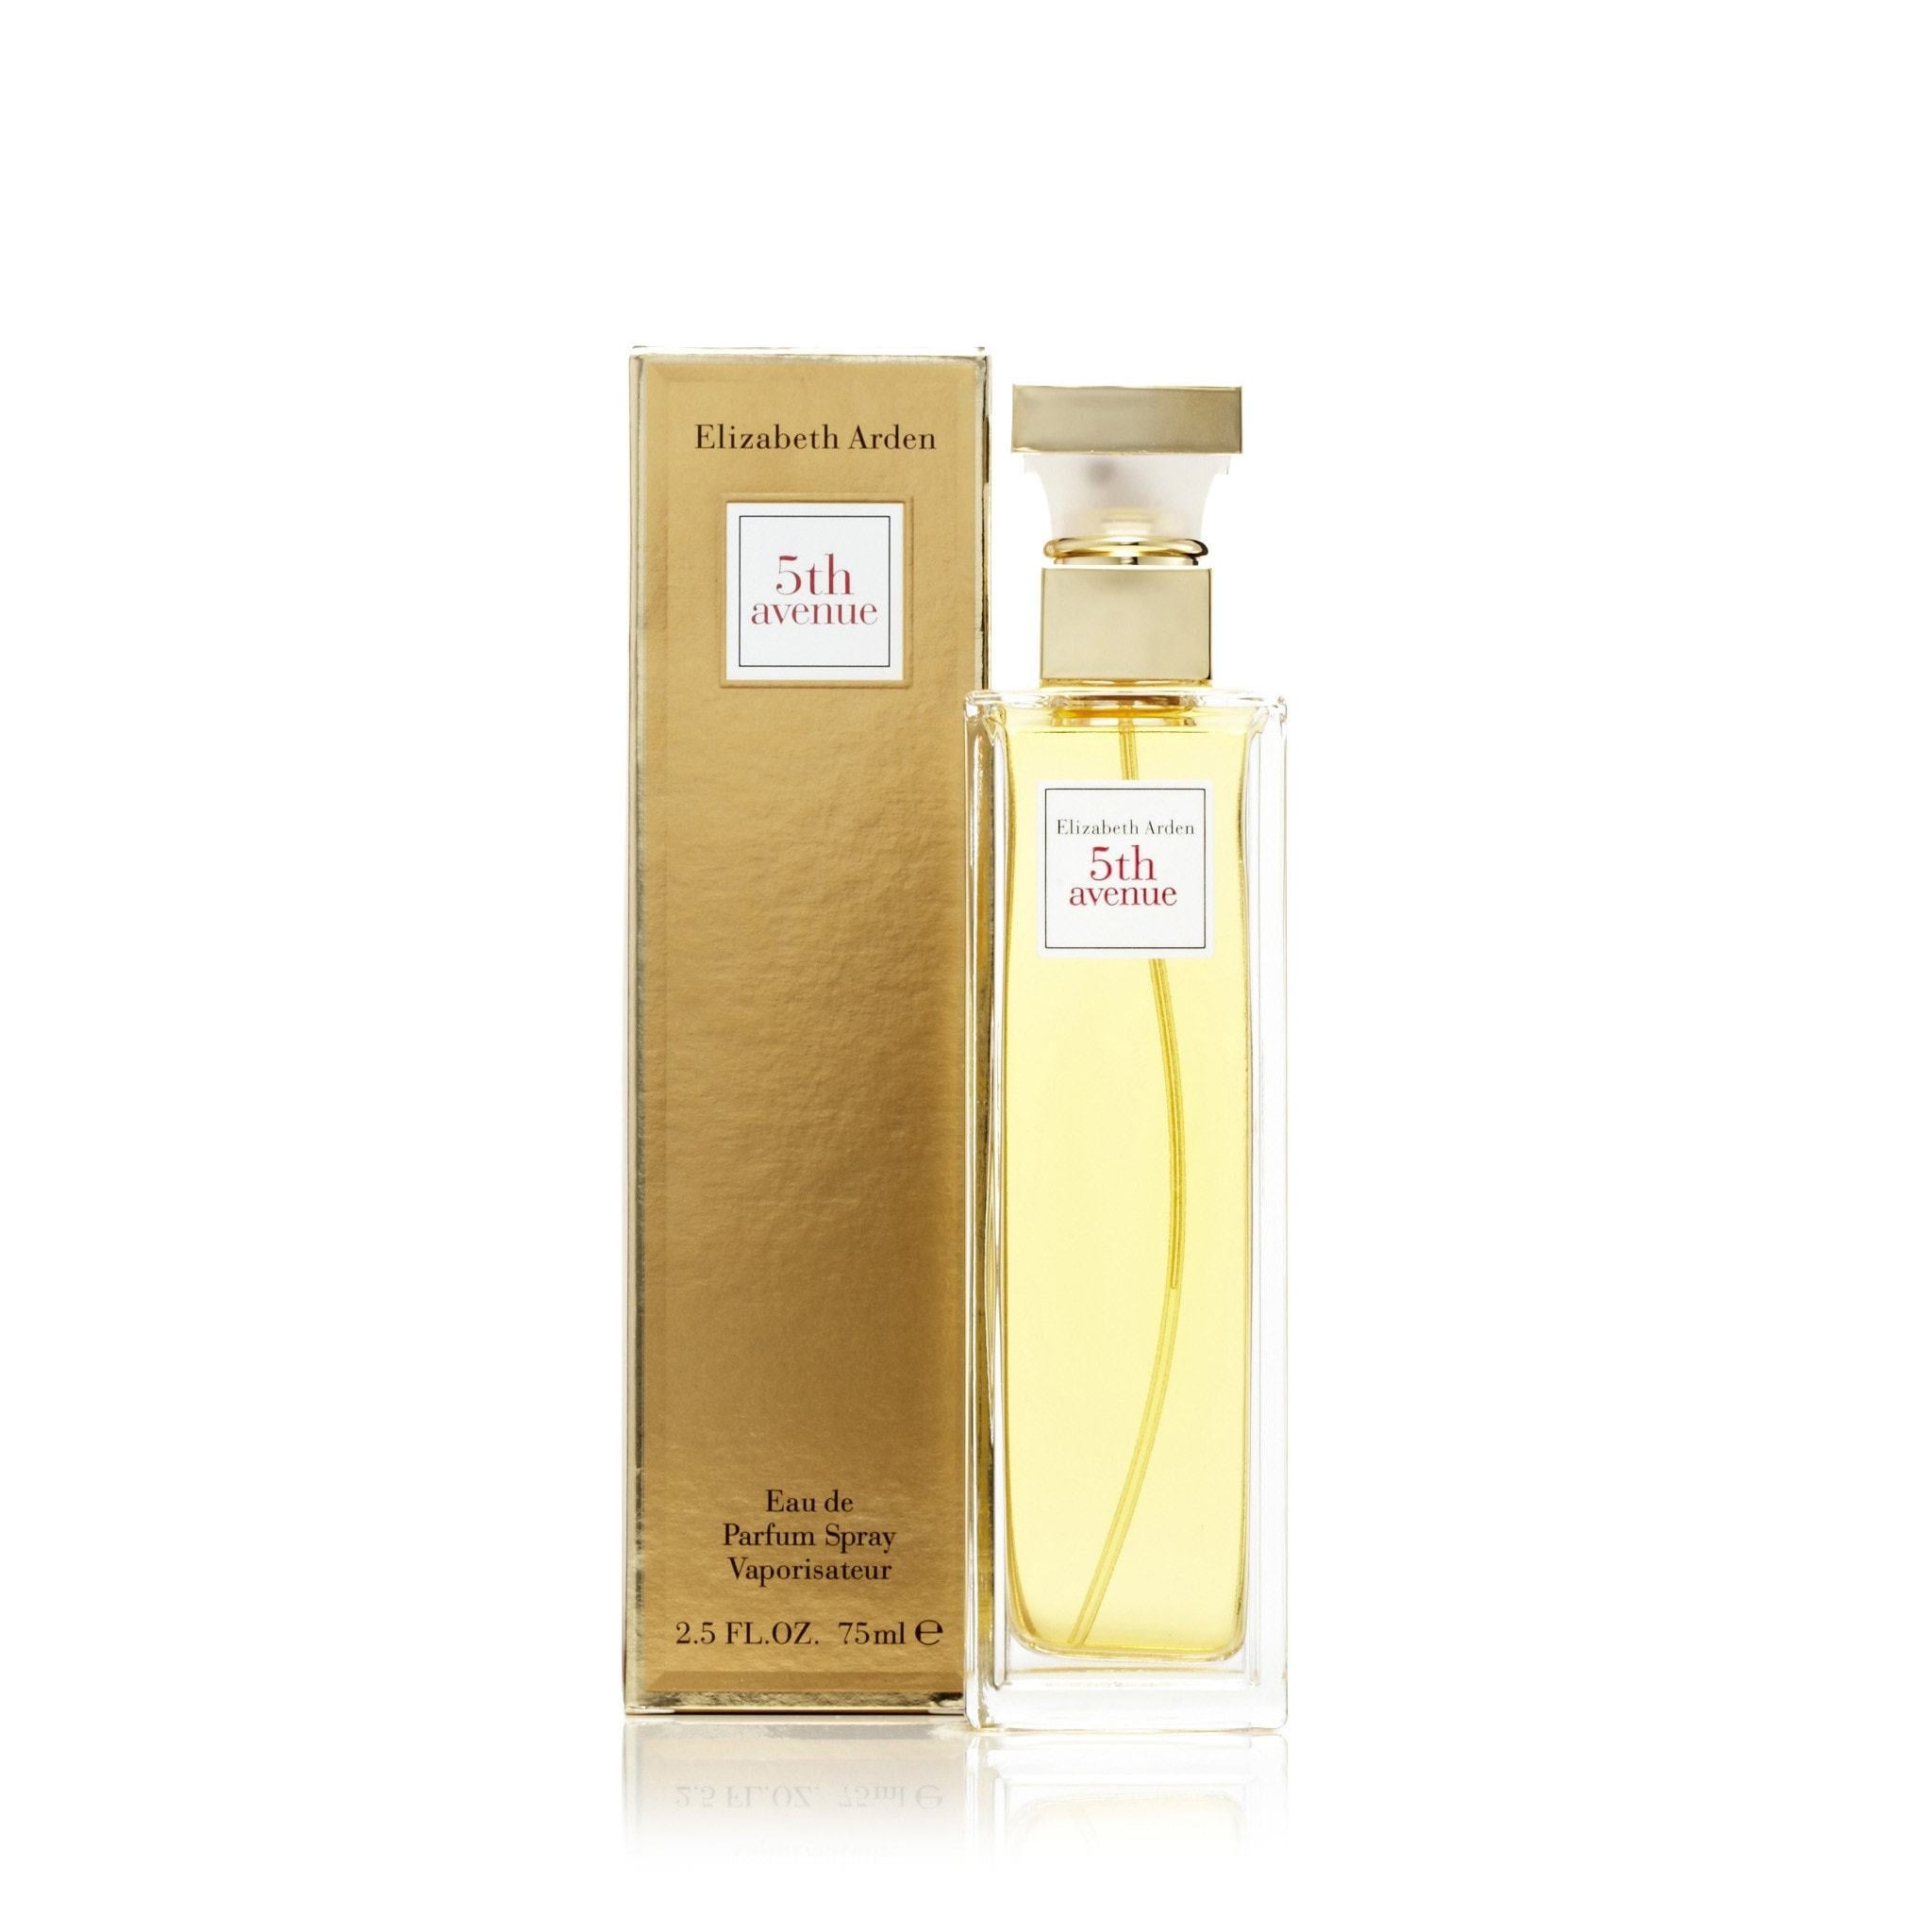 by de Ave. Parfum 5th for Elizabeth Spray Women Eau – Arden Perfumania